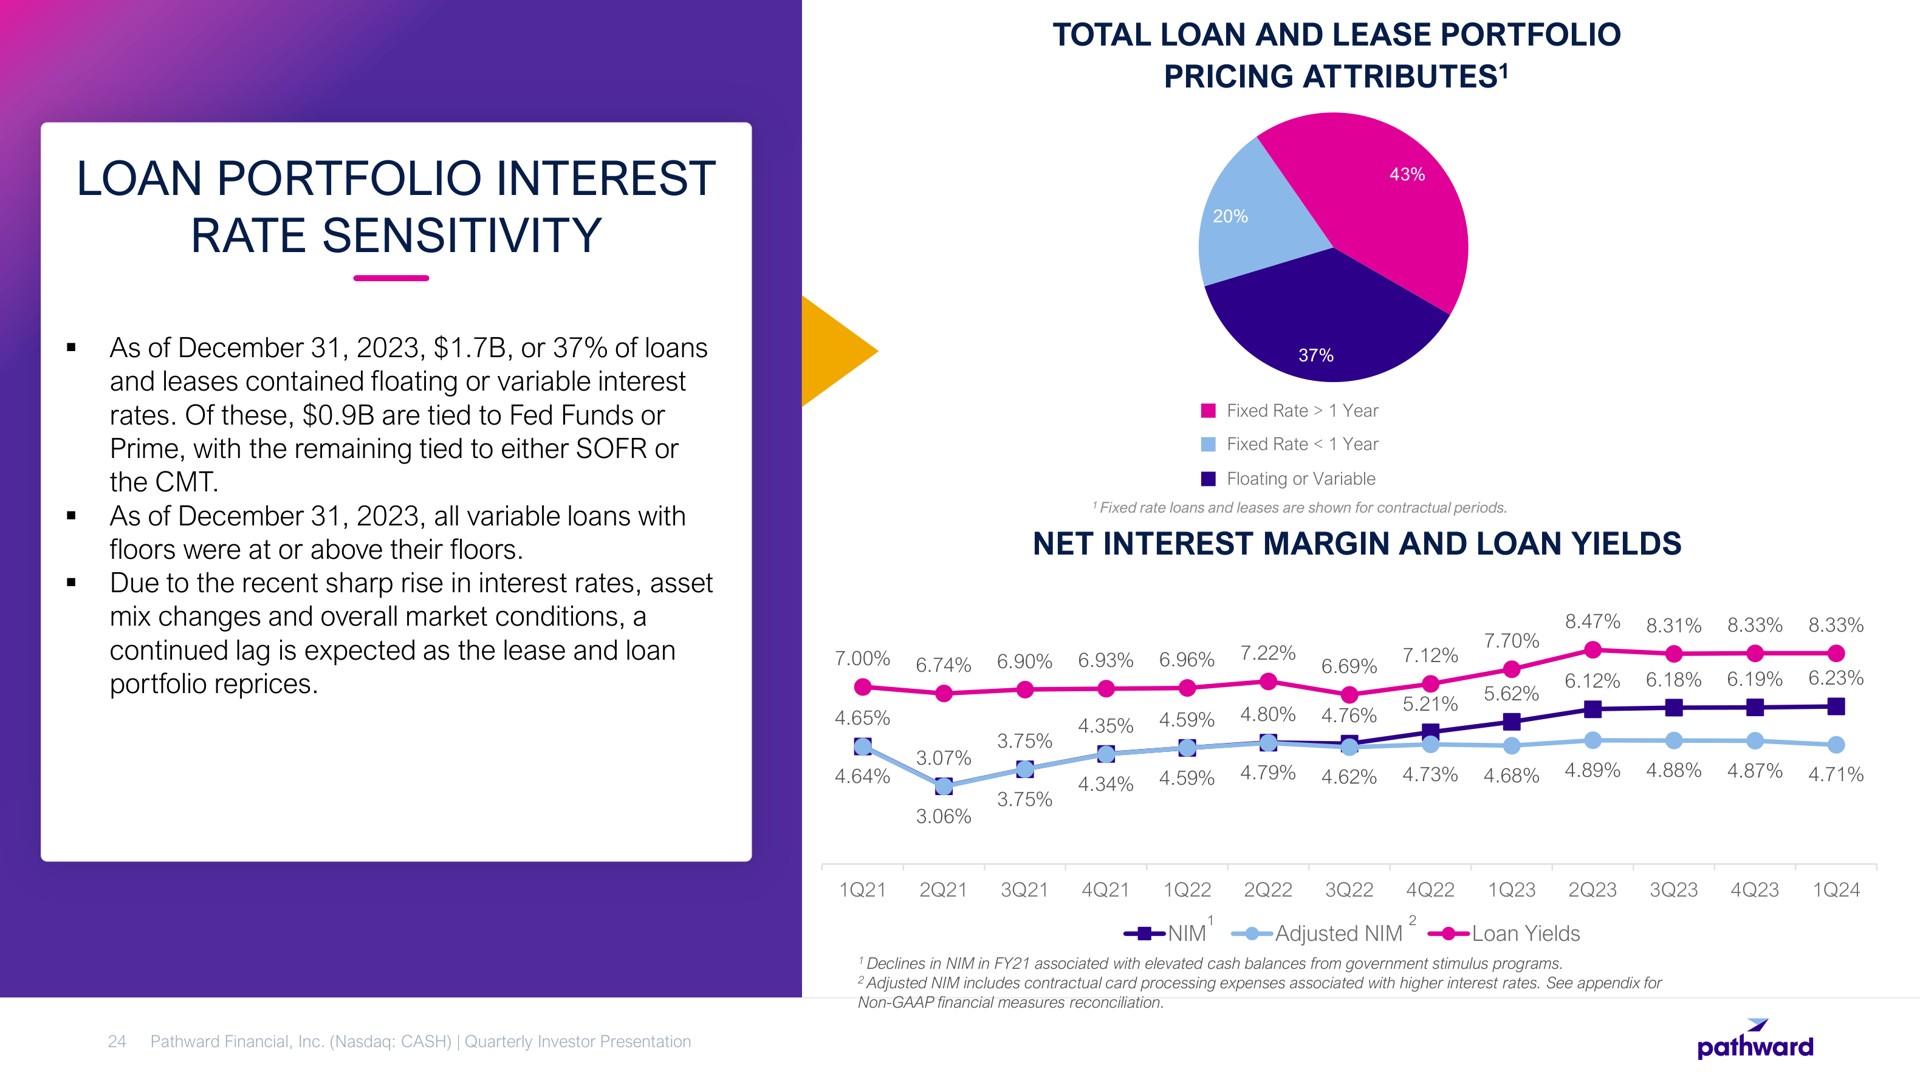 loan portfolio interest rate sensitivity | Pathward Financial